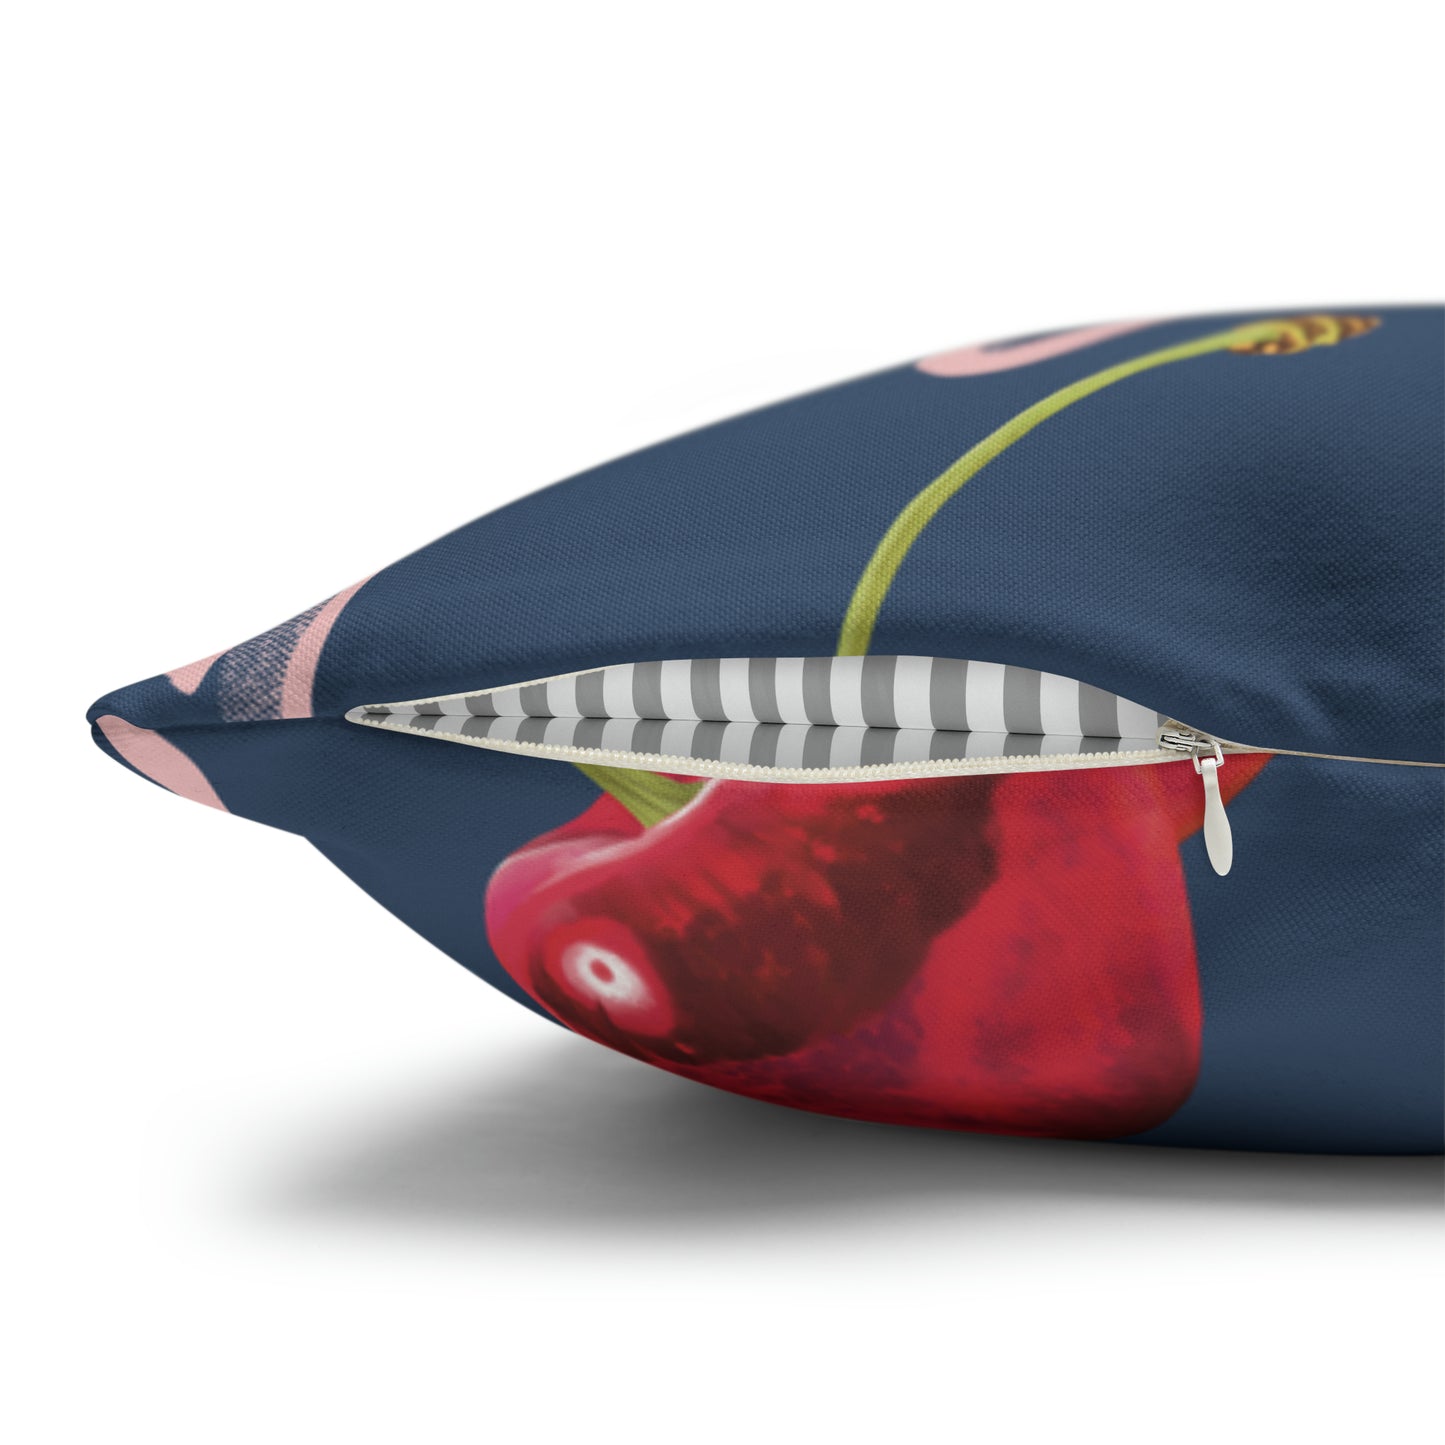 Navy Cherry Love Bomb Square Pillow Cases